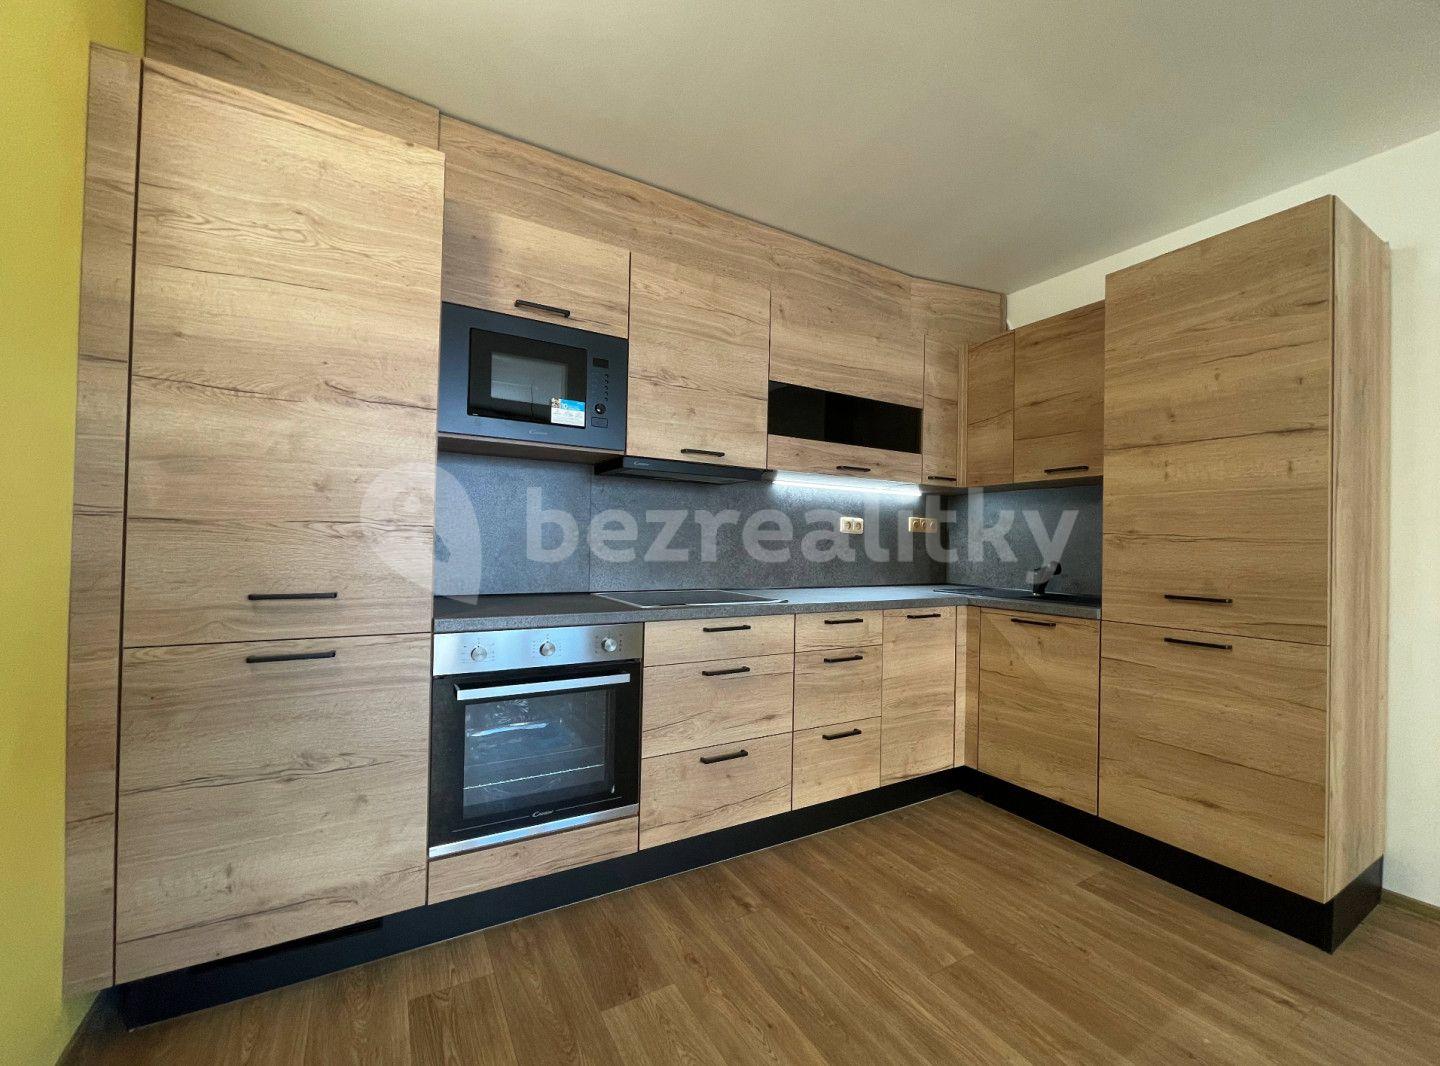 Predaj bytu 2-izbový 39 m², Dlouhá, České Budějovice, Jihočeský kraj